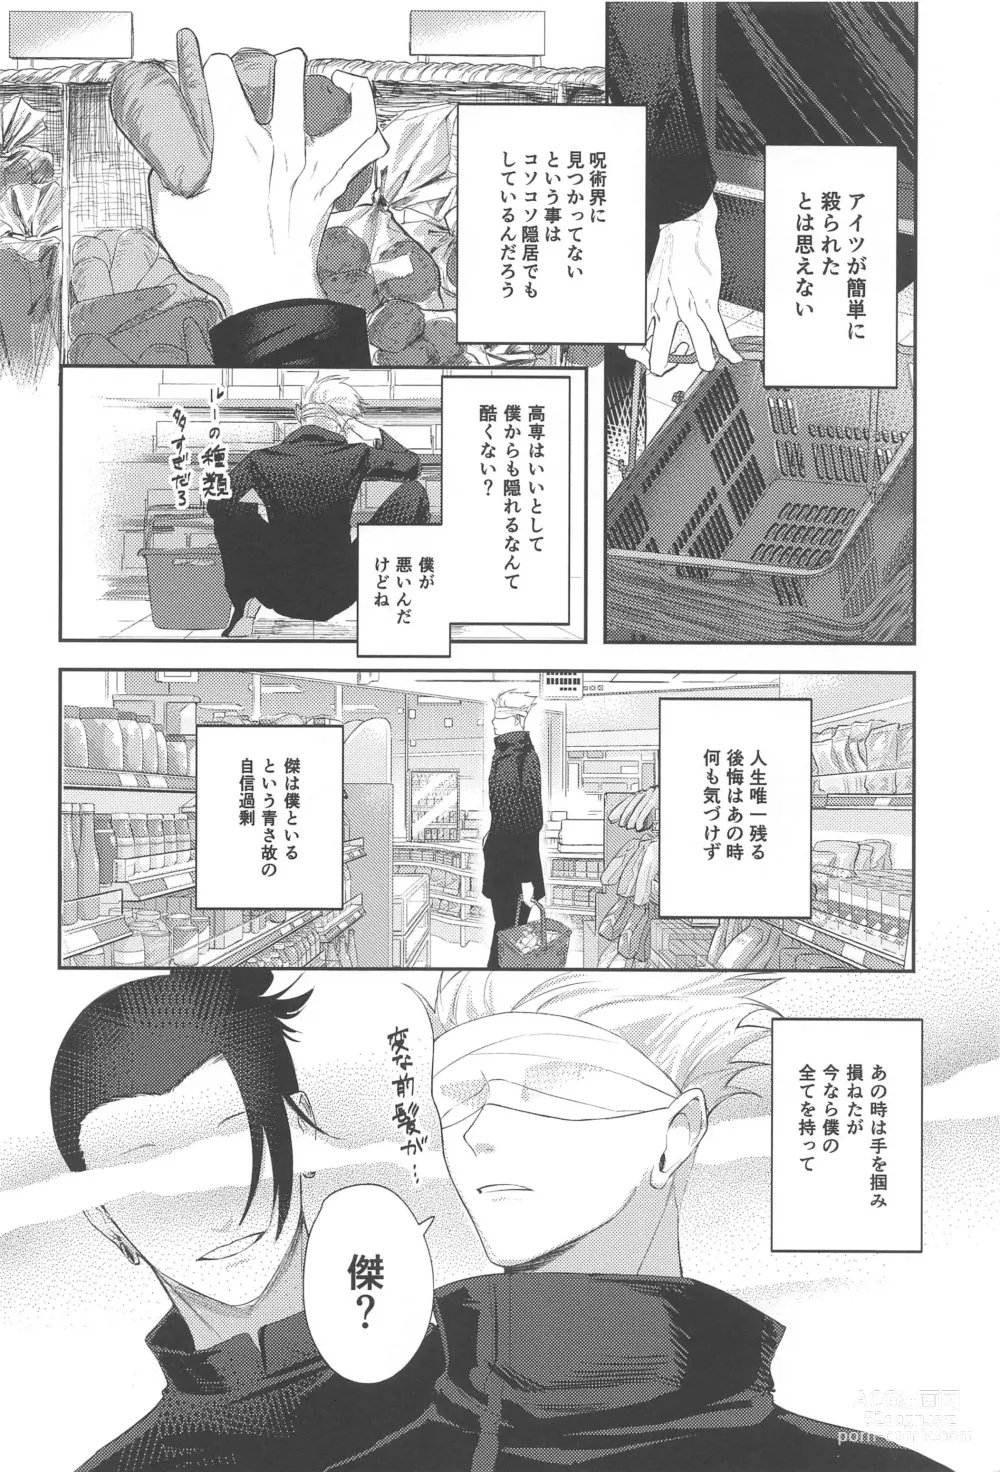 Page 7 of doujinshi Higatsuku Inazuma - Lightning that catches fire